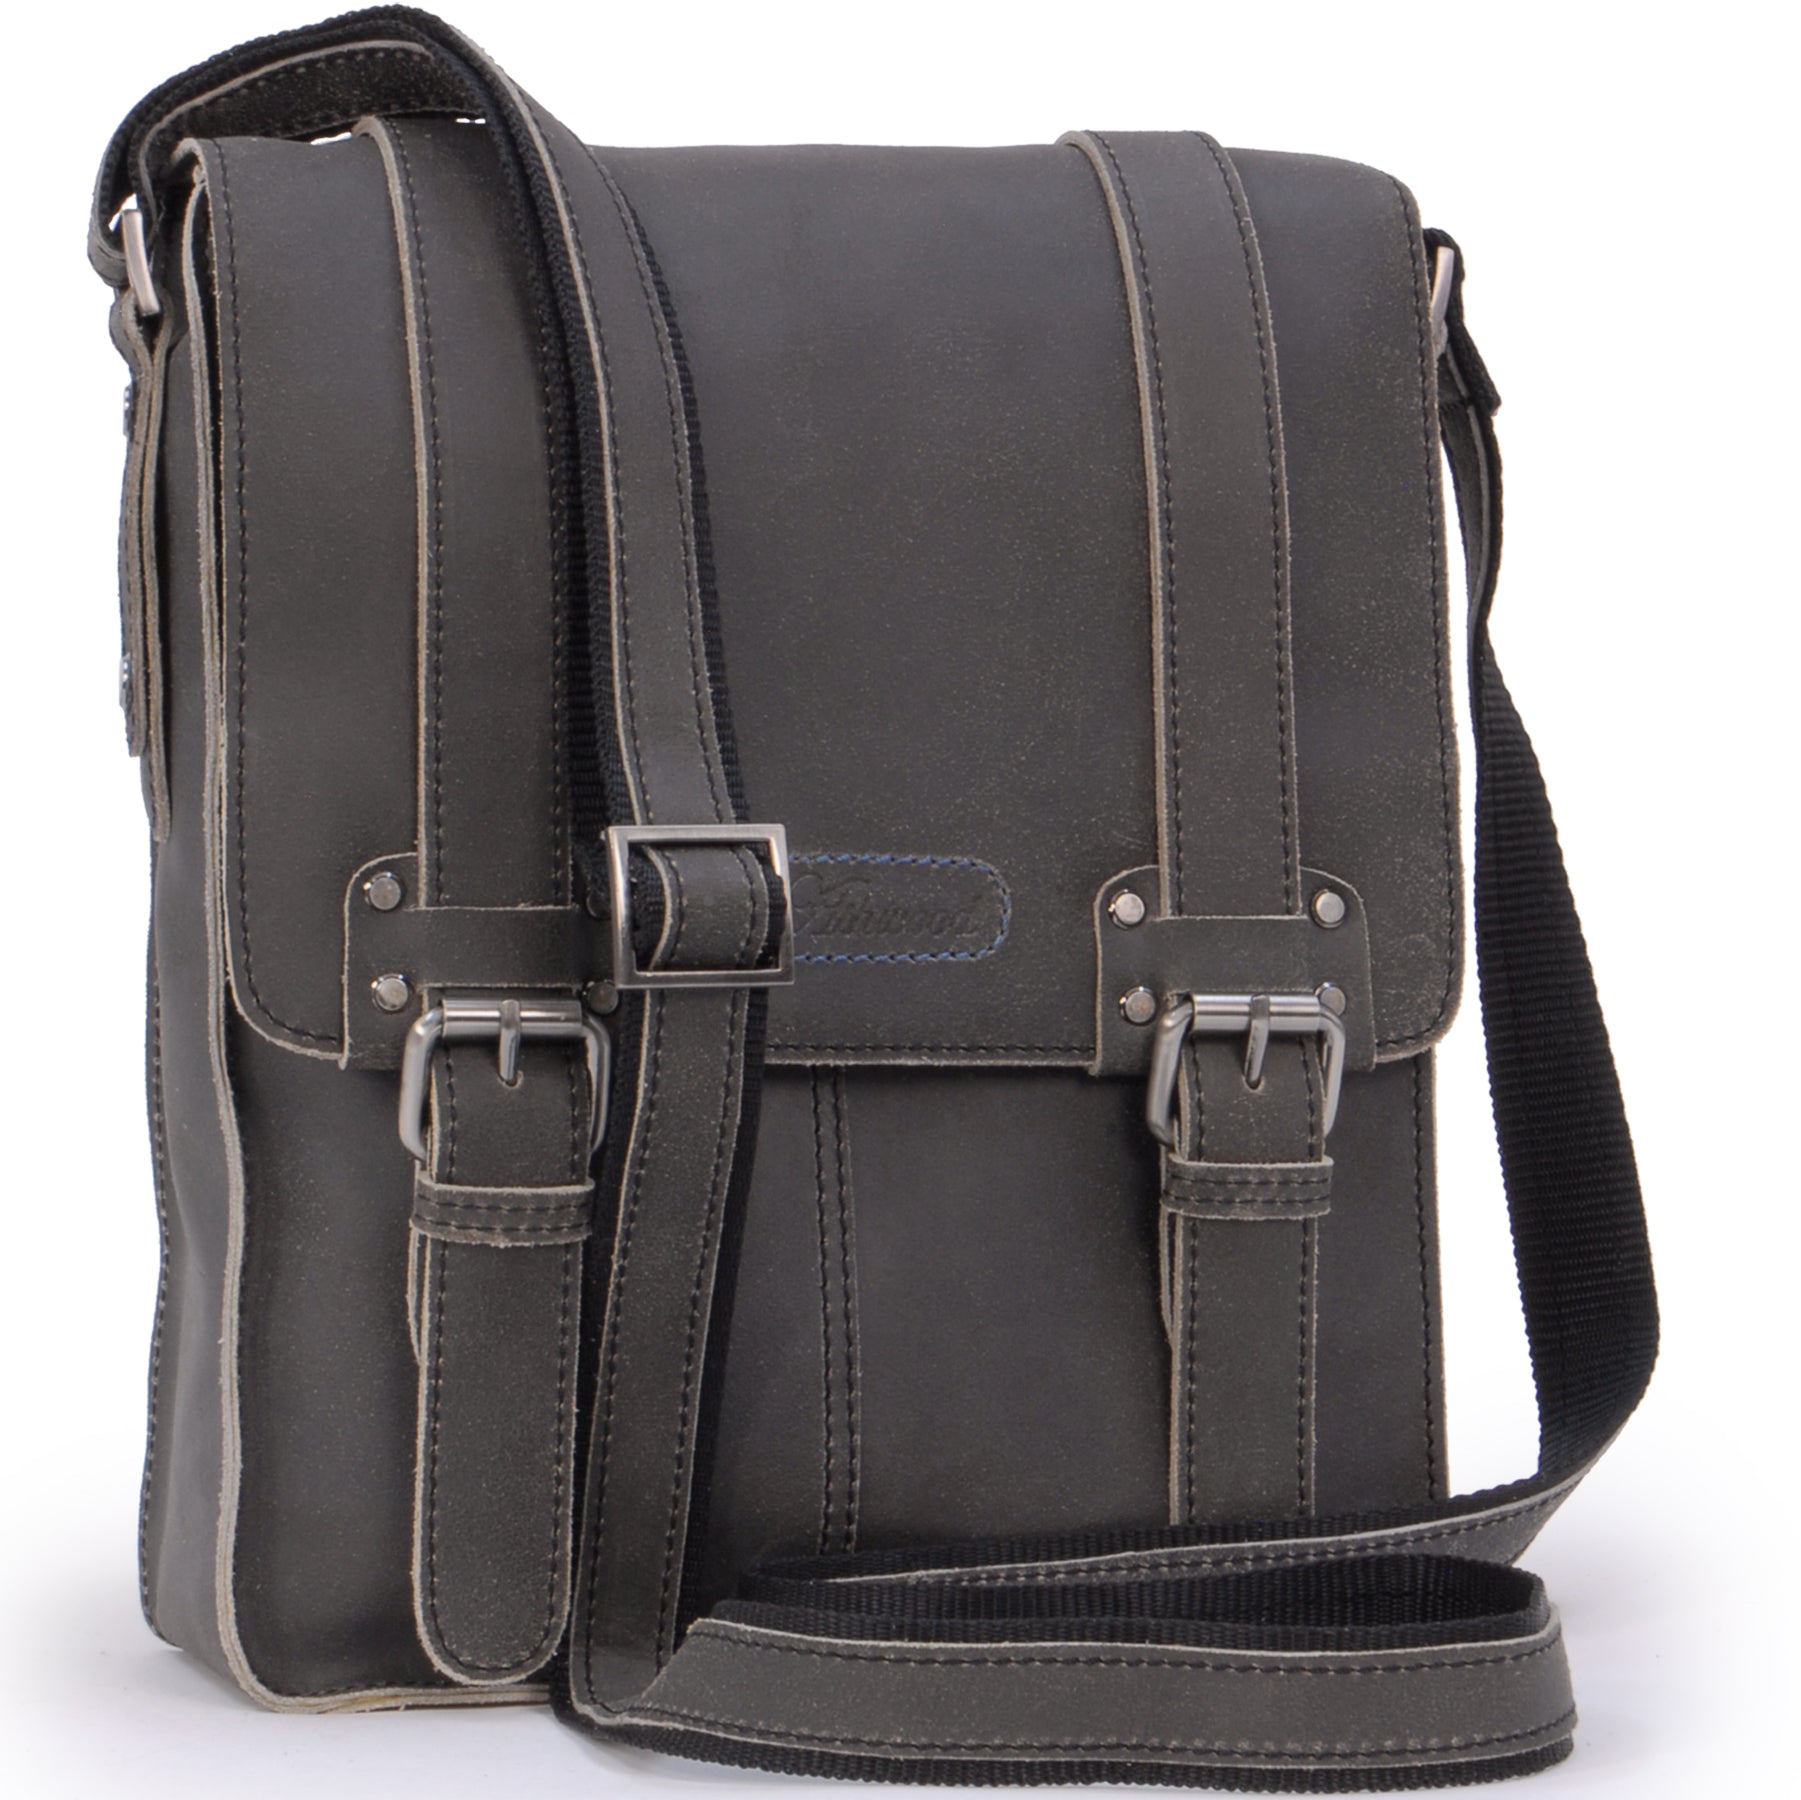 UBORSE Men's Messenger Shoulder Bag Leather Cross-body Handbag iPad Mini  Casual Satchel Side Bag for Work Commuter Business Travel: Amazon.co.uk:  Fashion